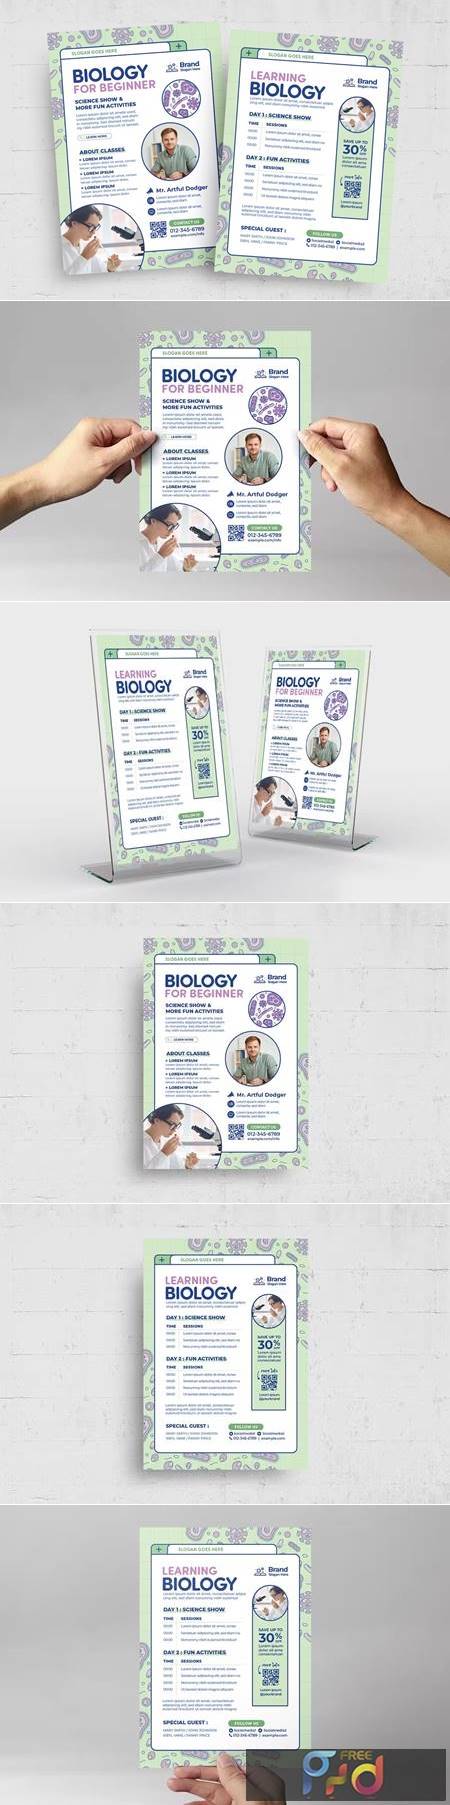 Biology Education Flyer Template GX7MWW9 1